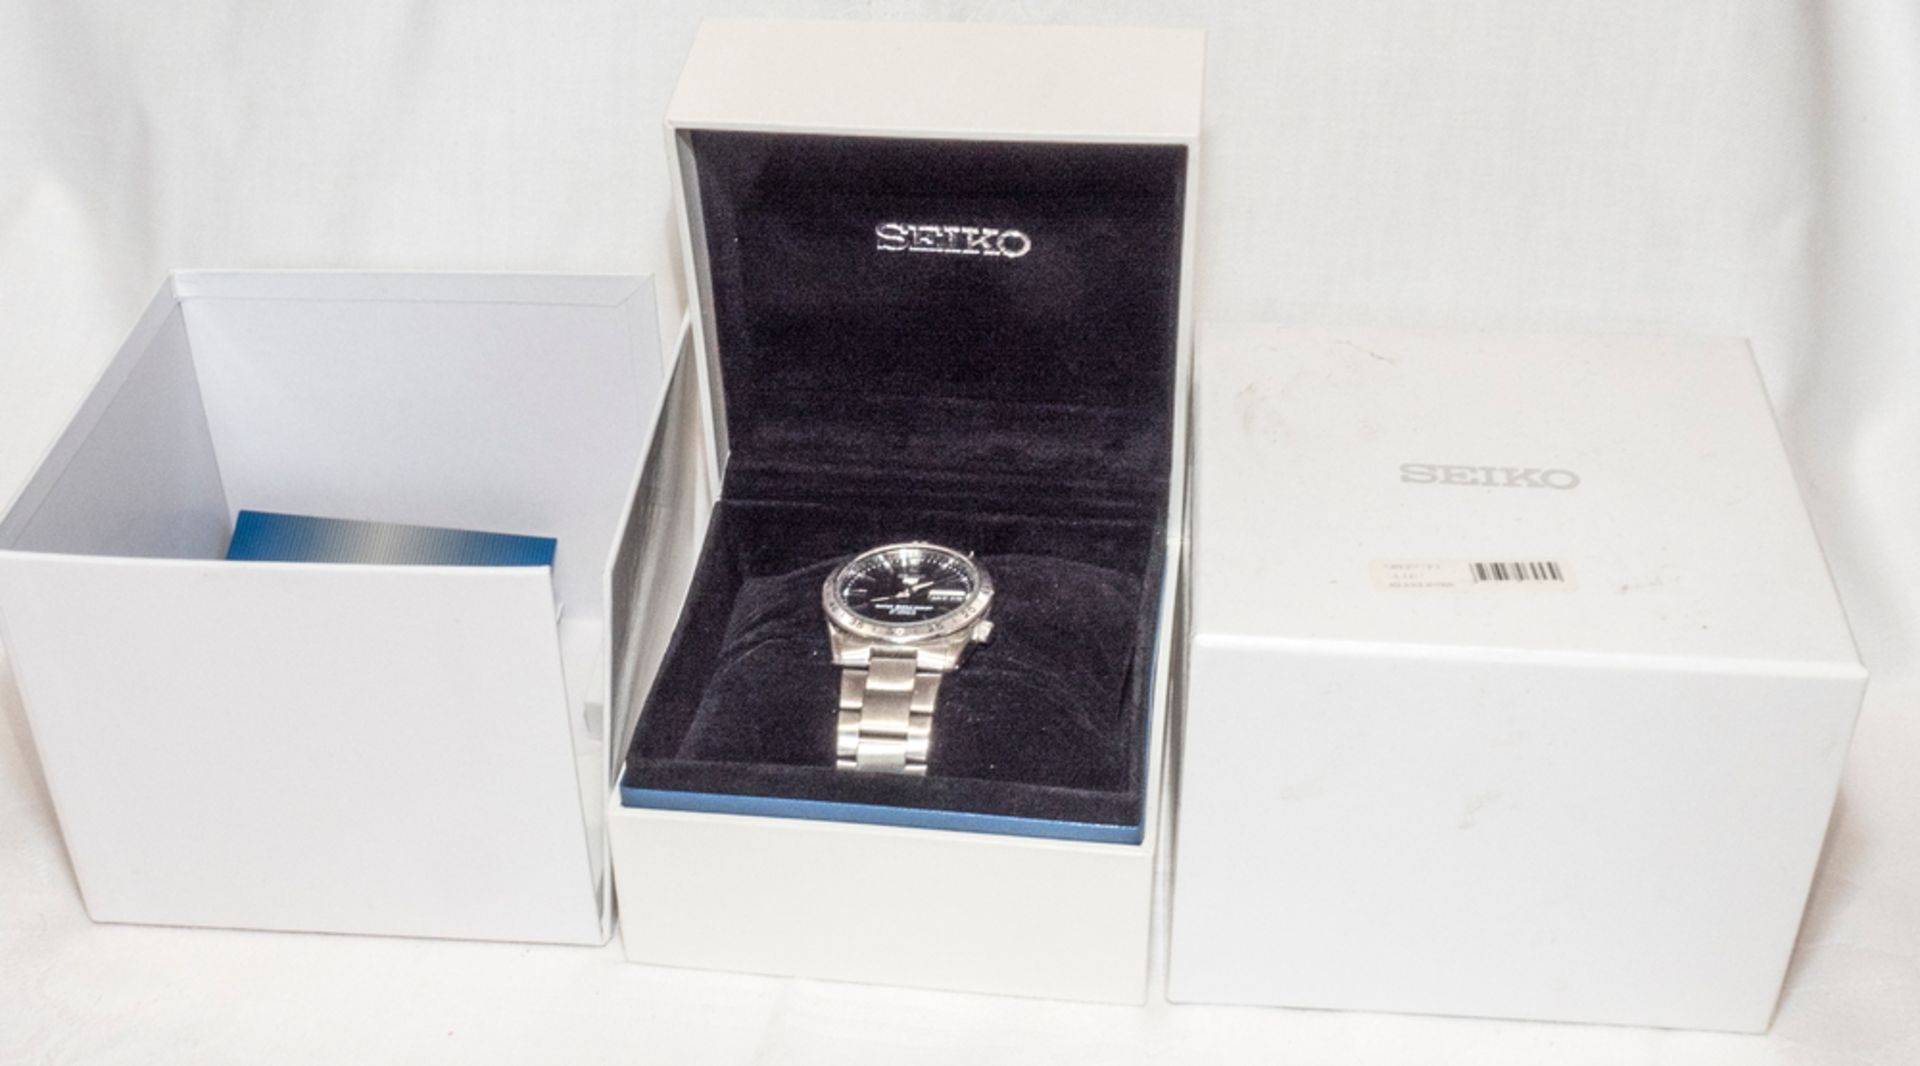 Seiko 5 Herrenarmband - Uhr, automatic, 21 Jewels, ungebraucht in original OVP. - Image 2 of 2